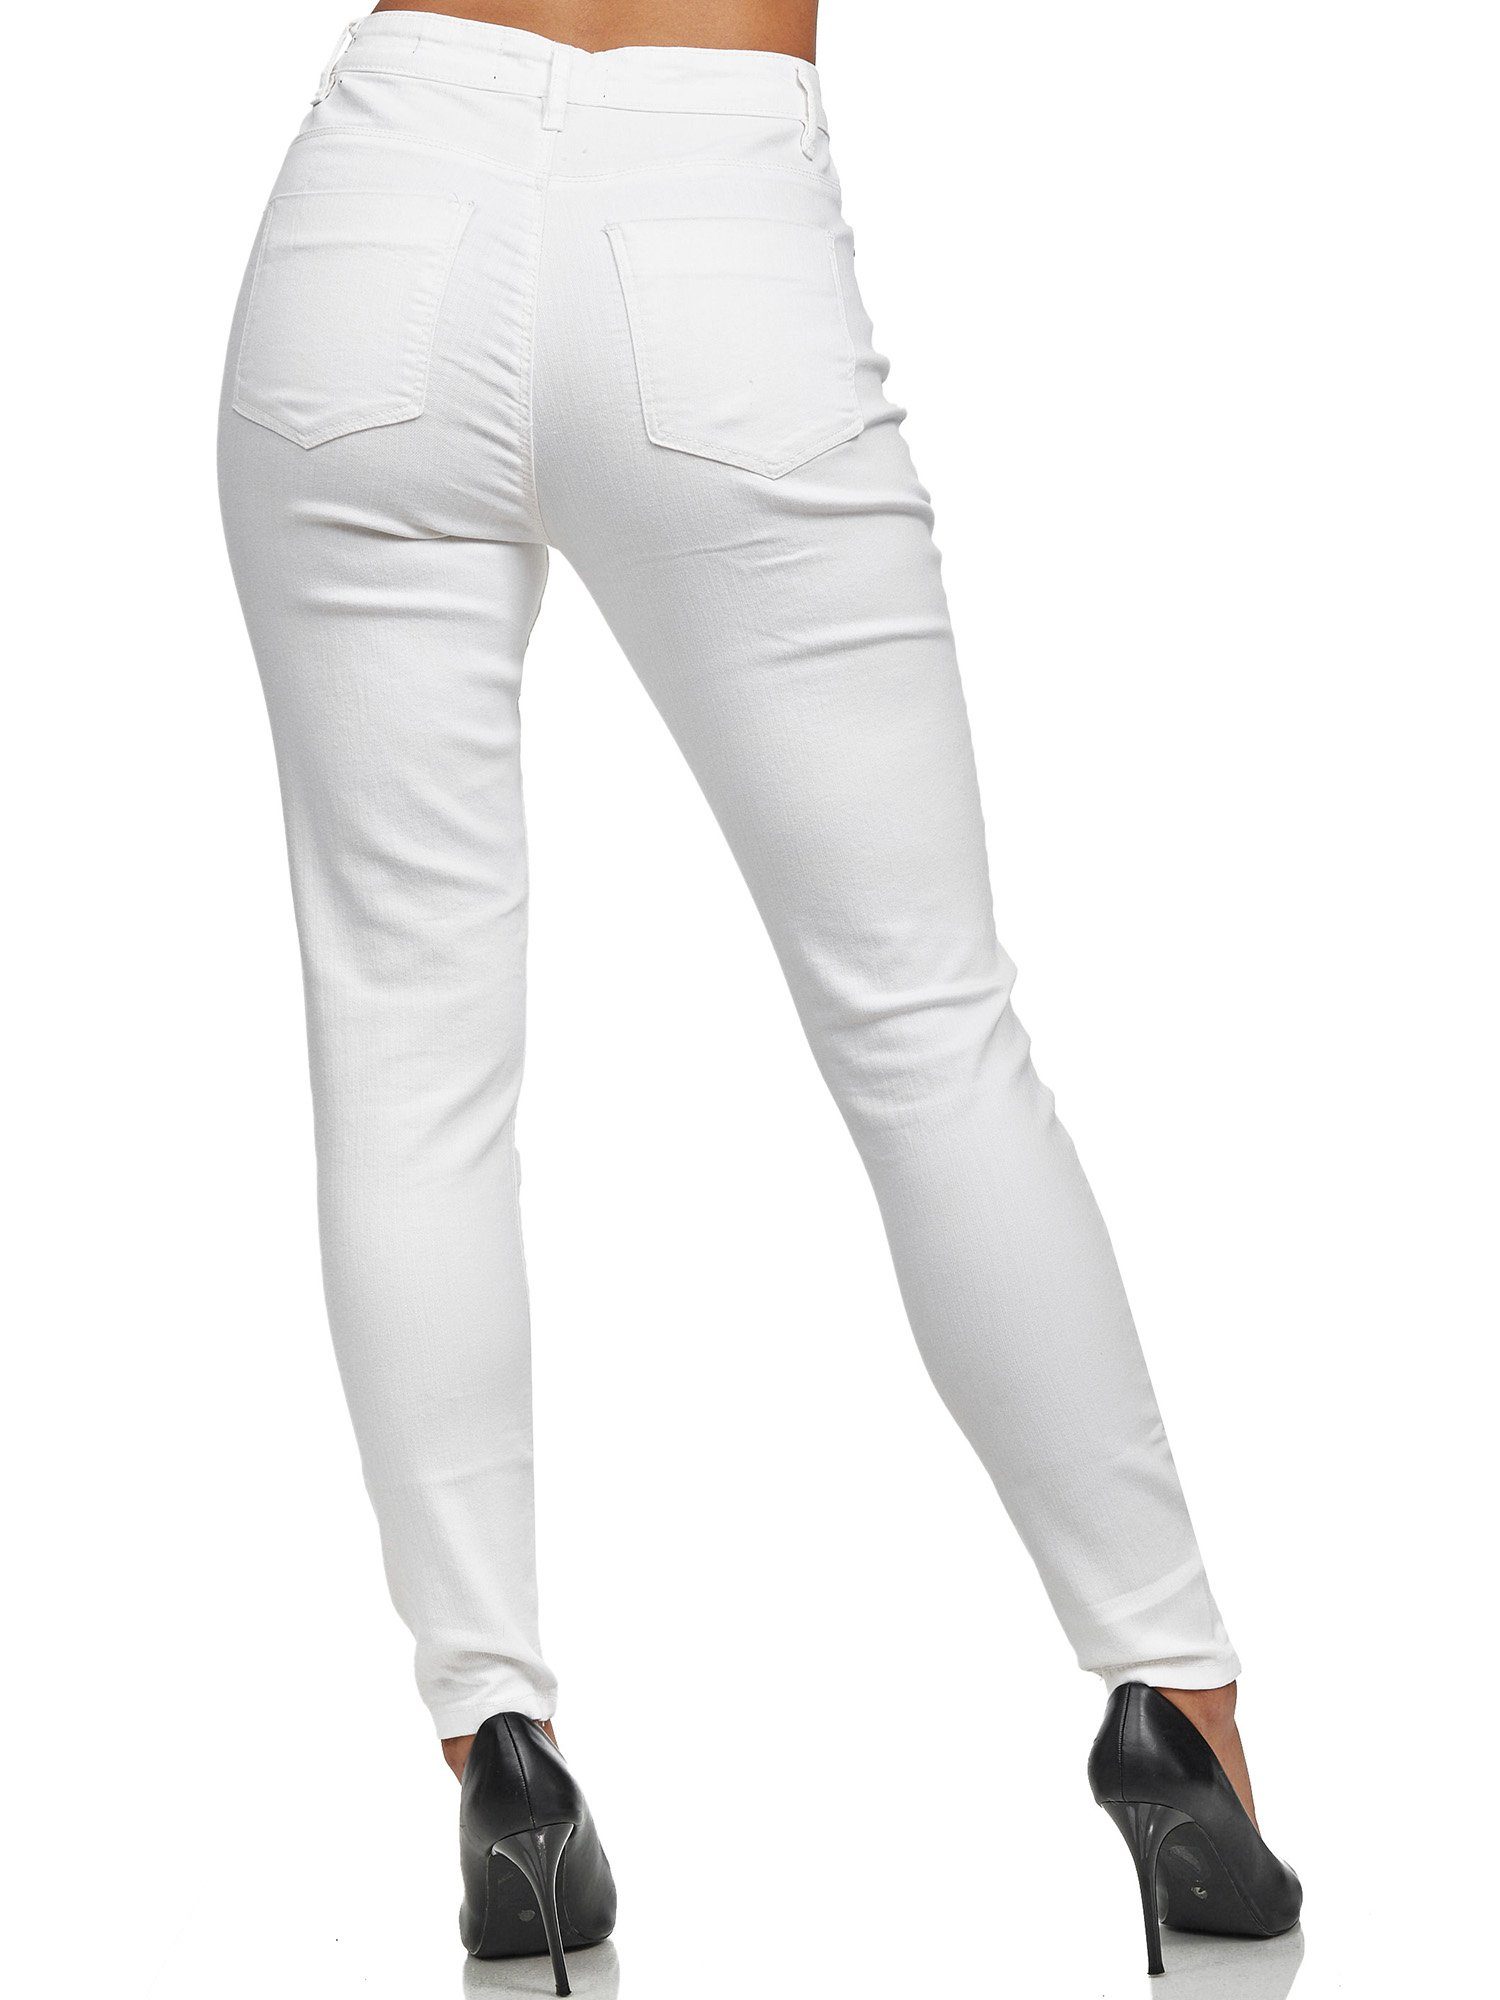 Damen Jeanshose High-waist-Jeans Tazzio F101 weiß Skinny Fit